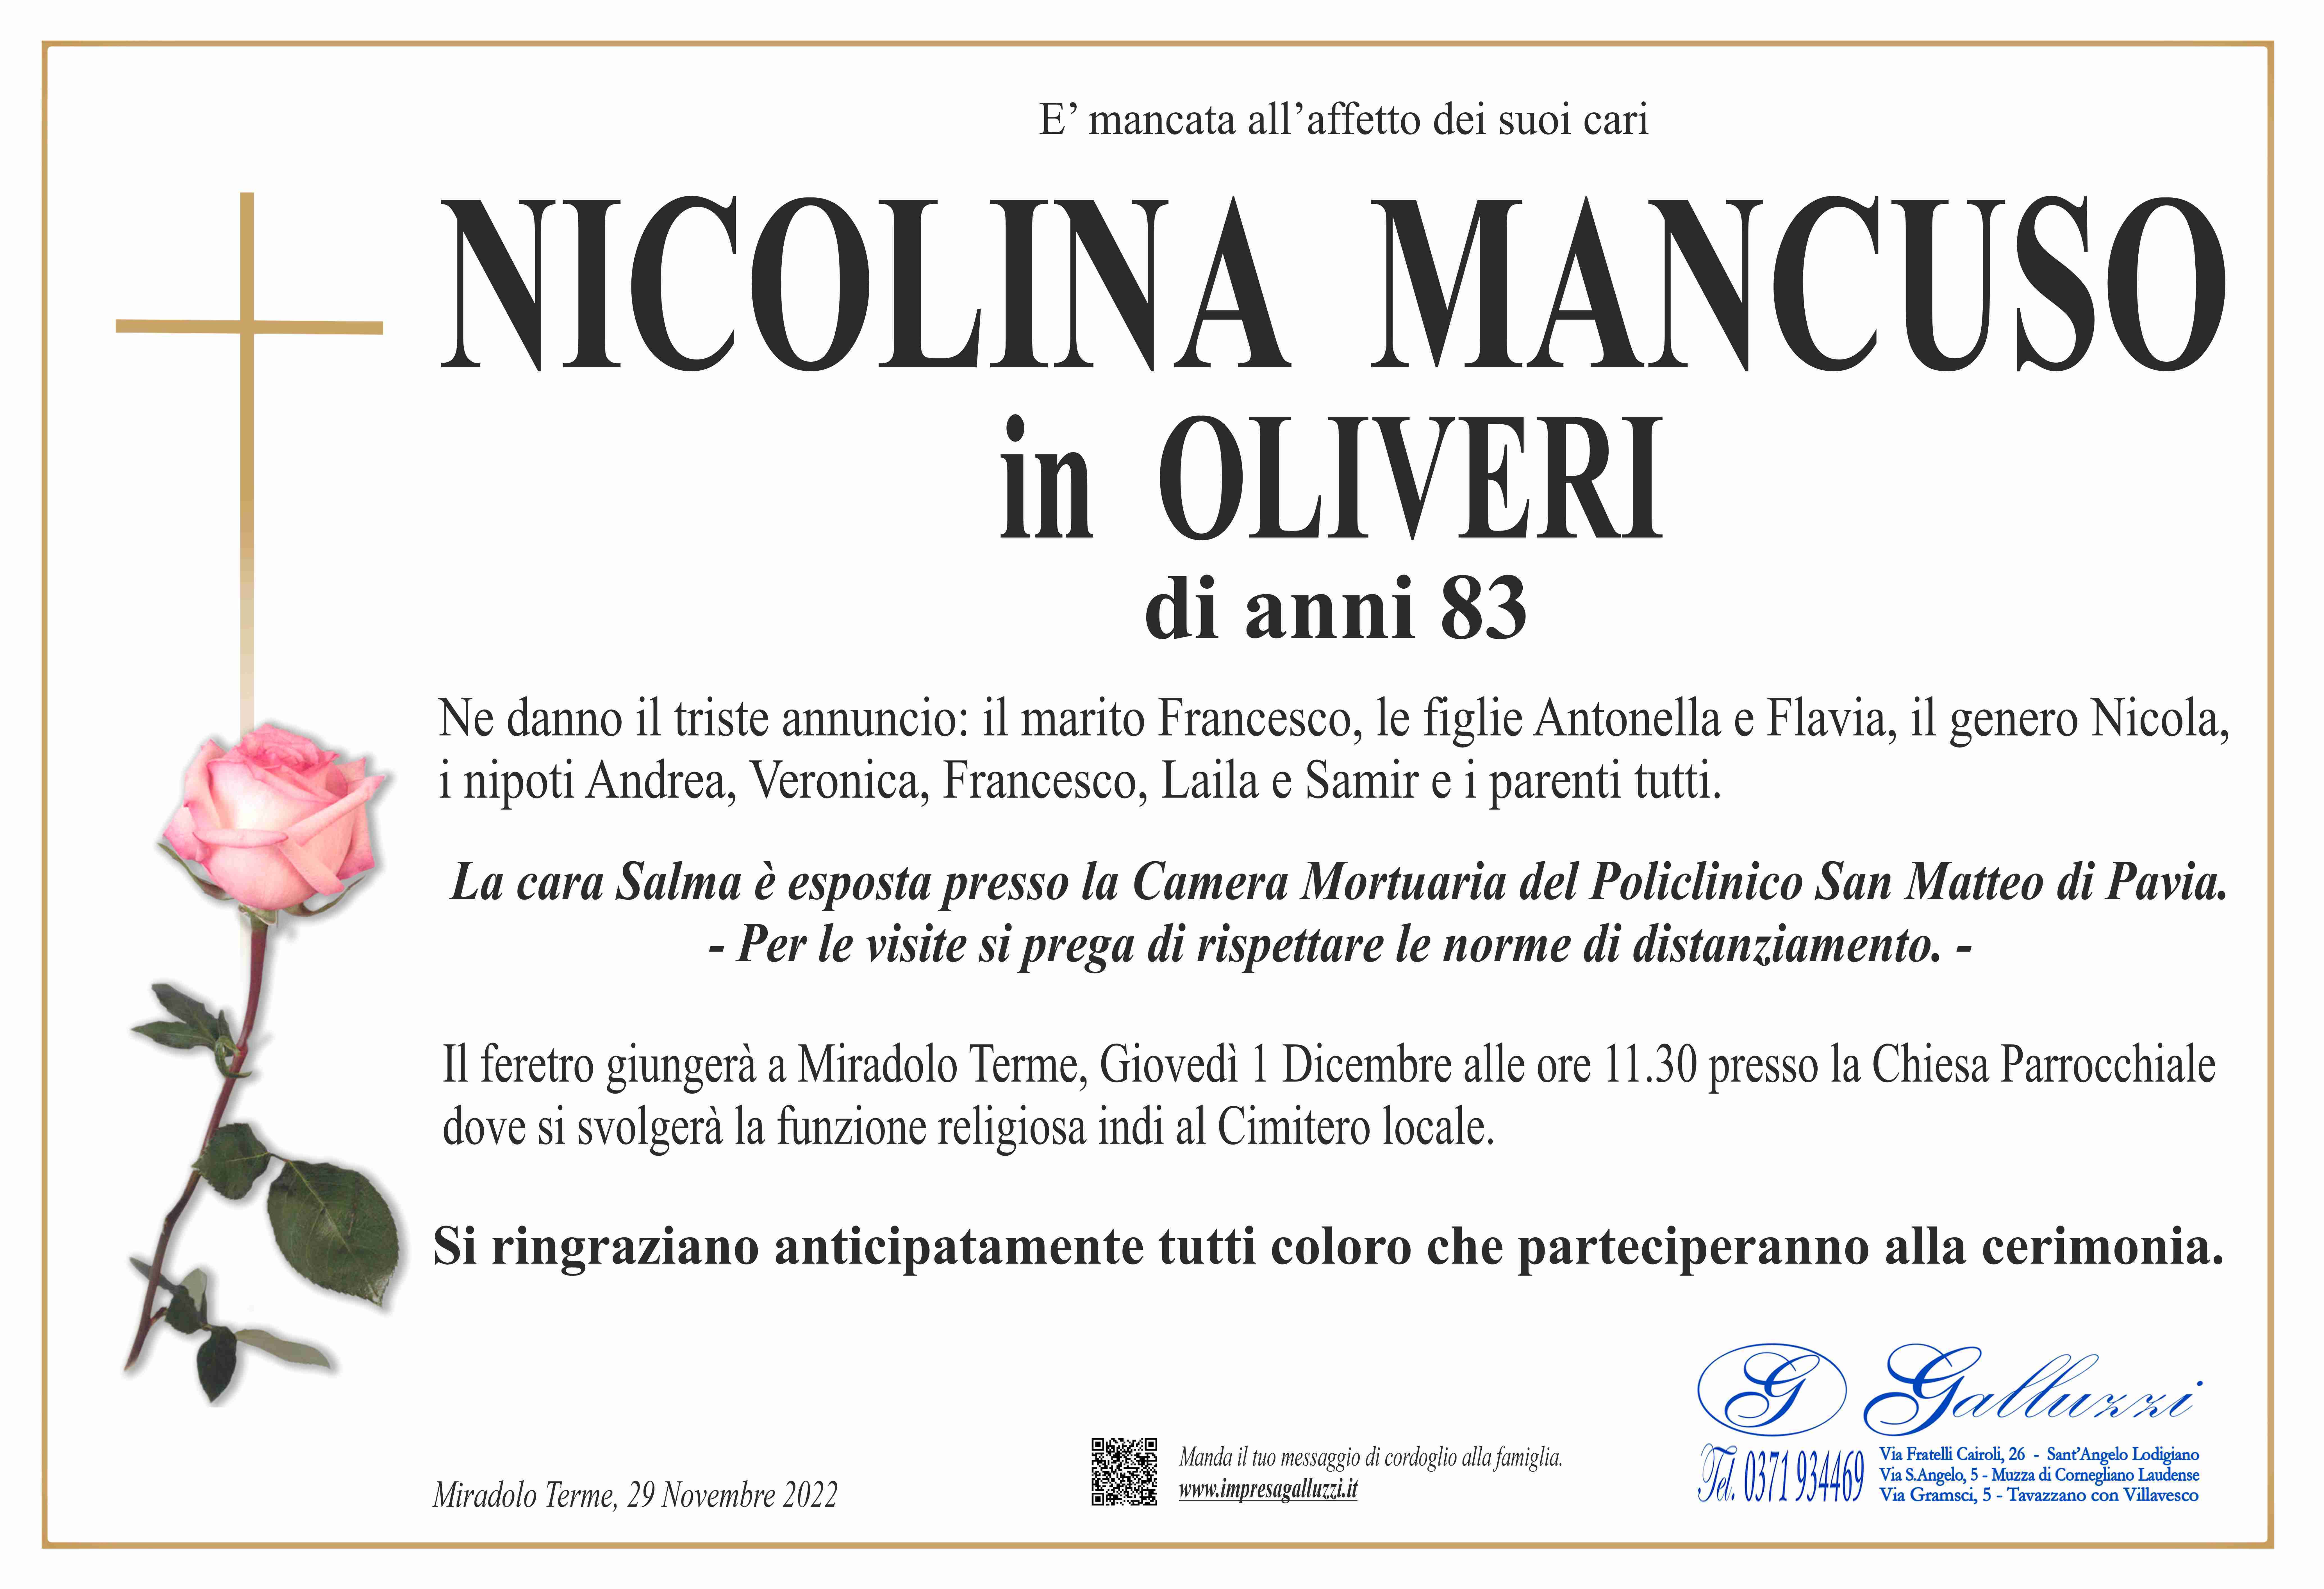 Nicolina Mancuso